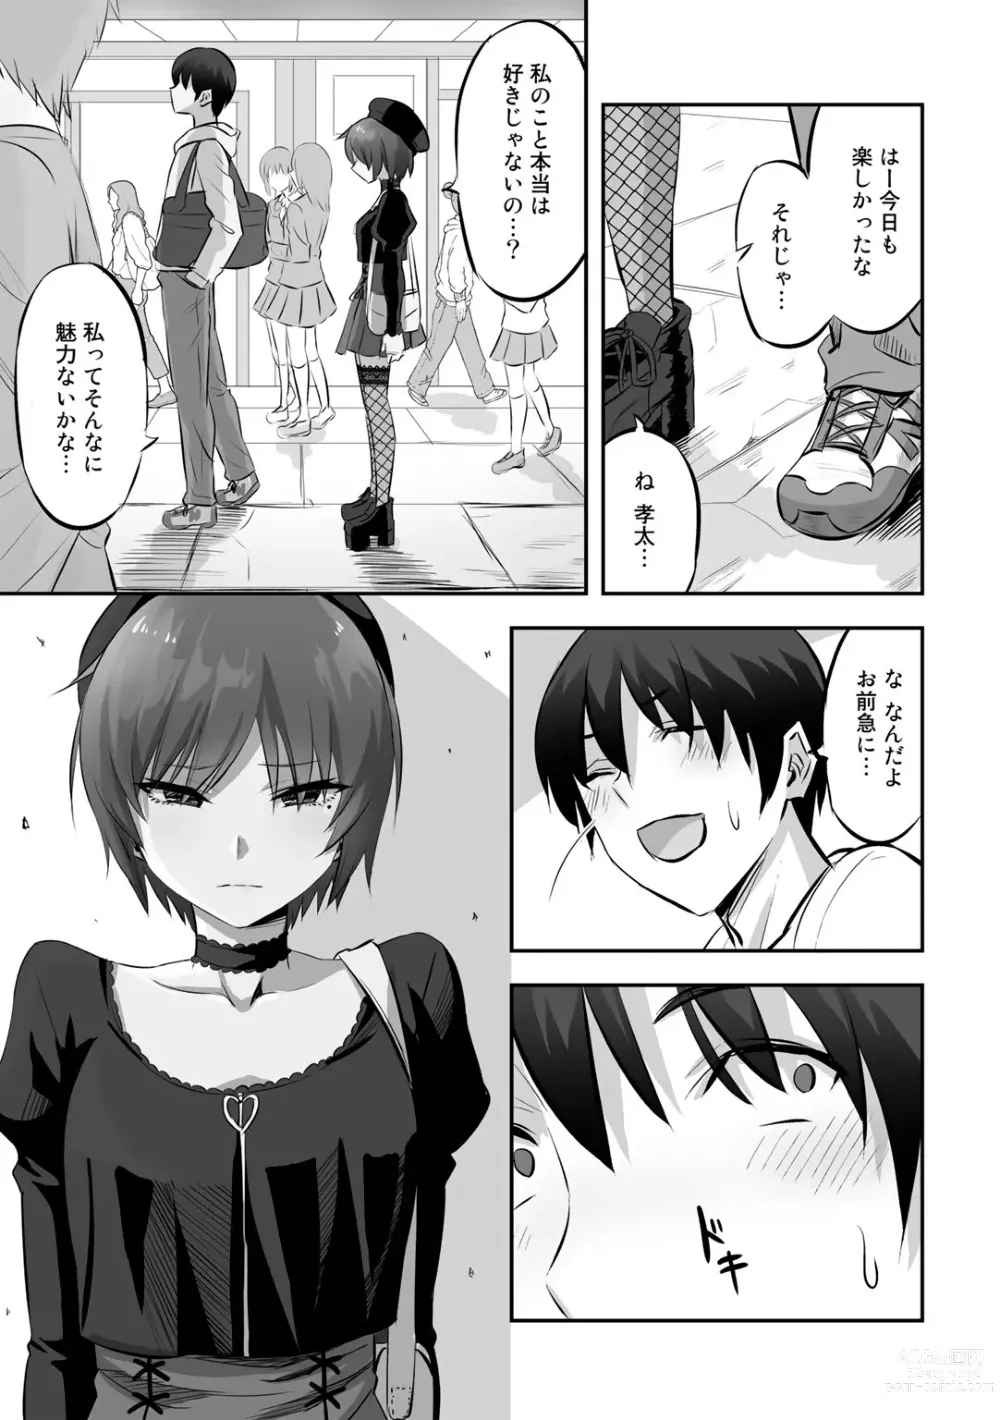 Page 209 of manga Netorare friends